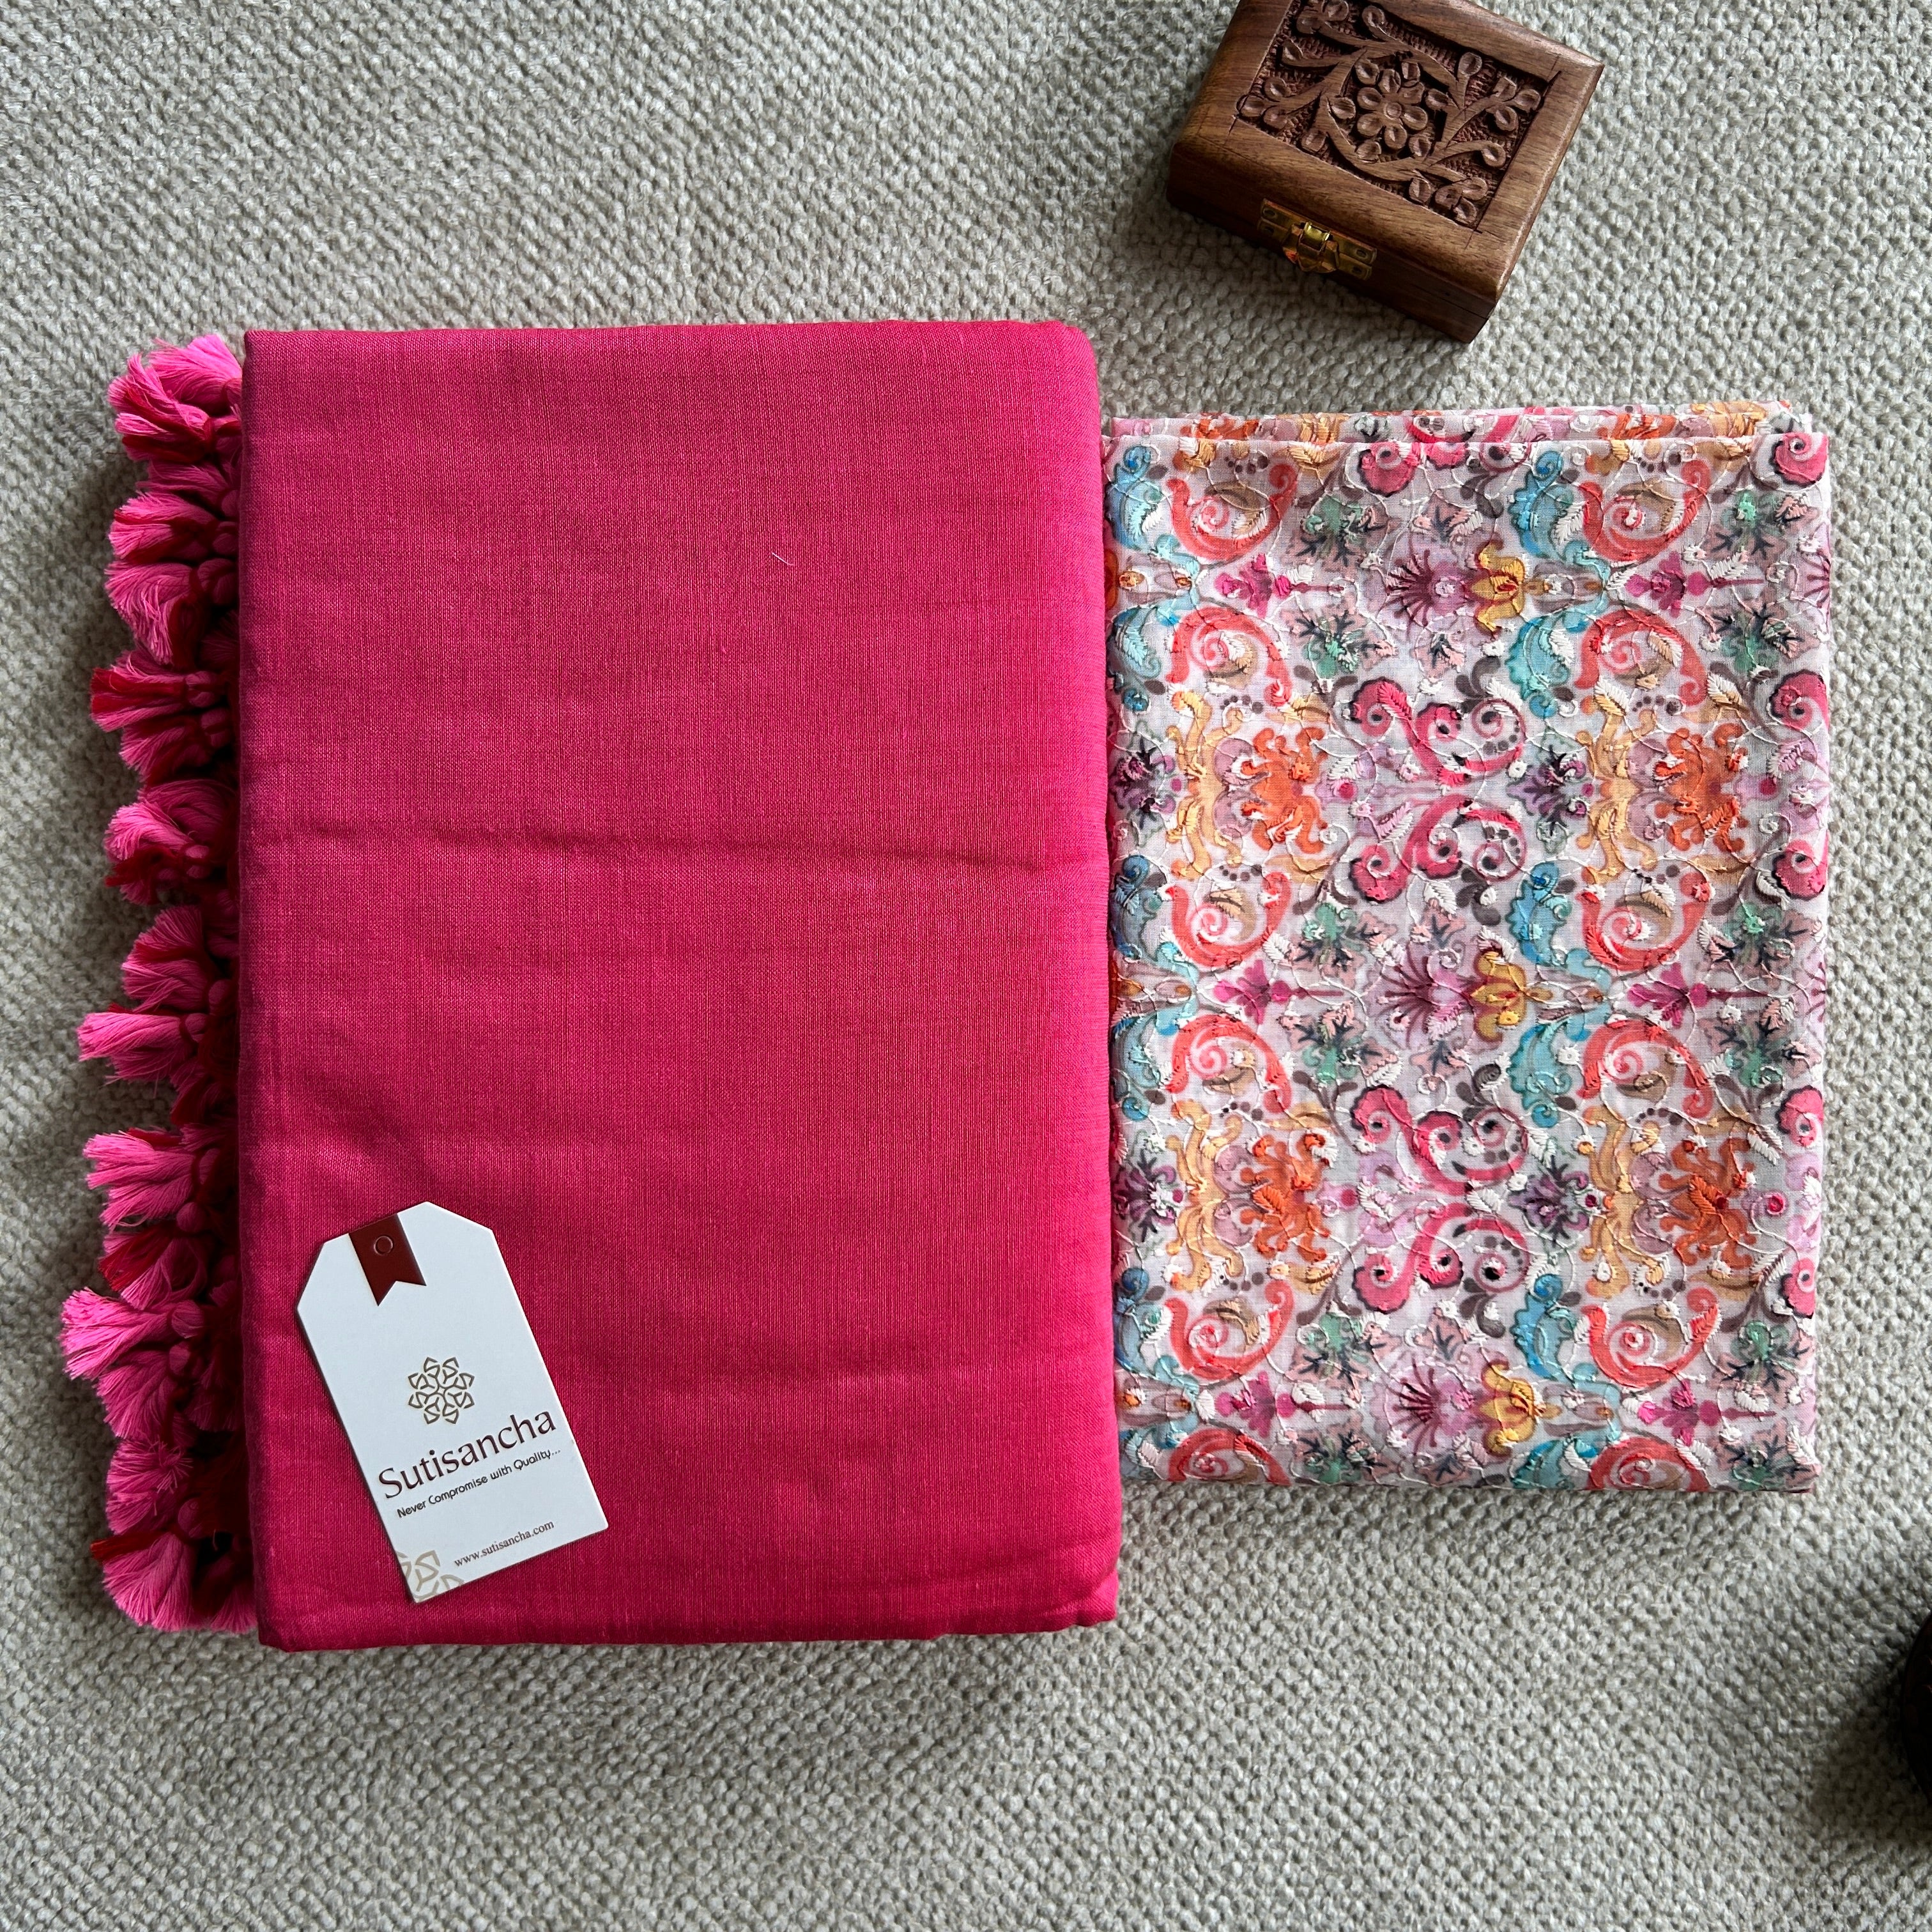 Sutisancha Pink Handloom Cotton Saree With Blouse